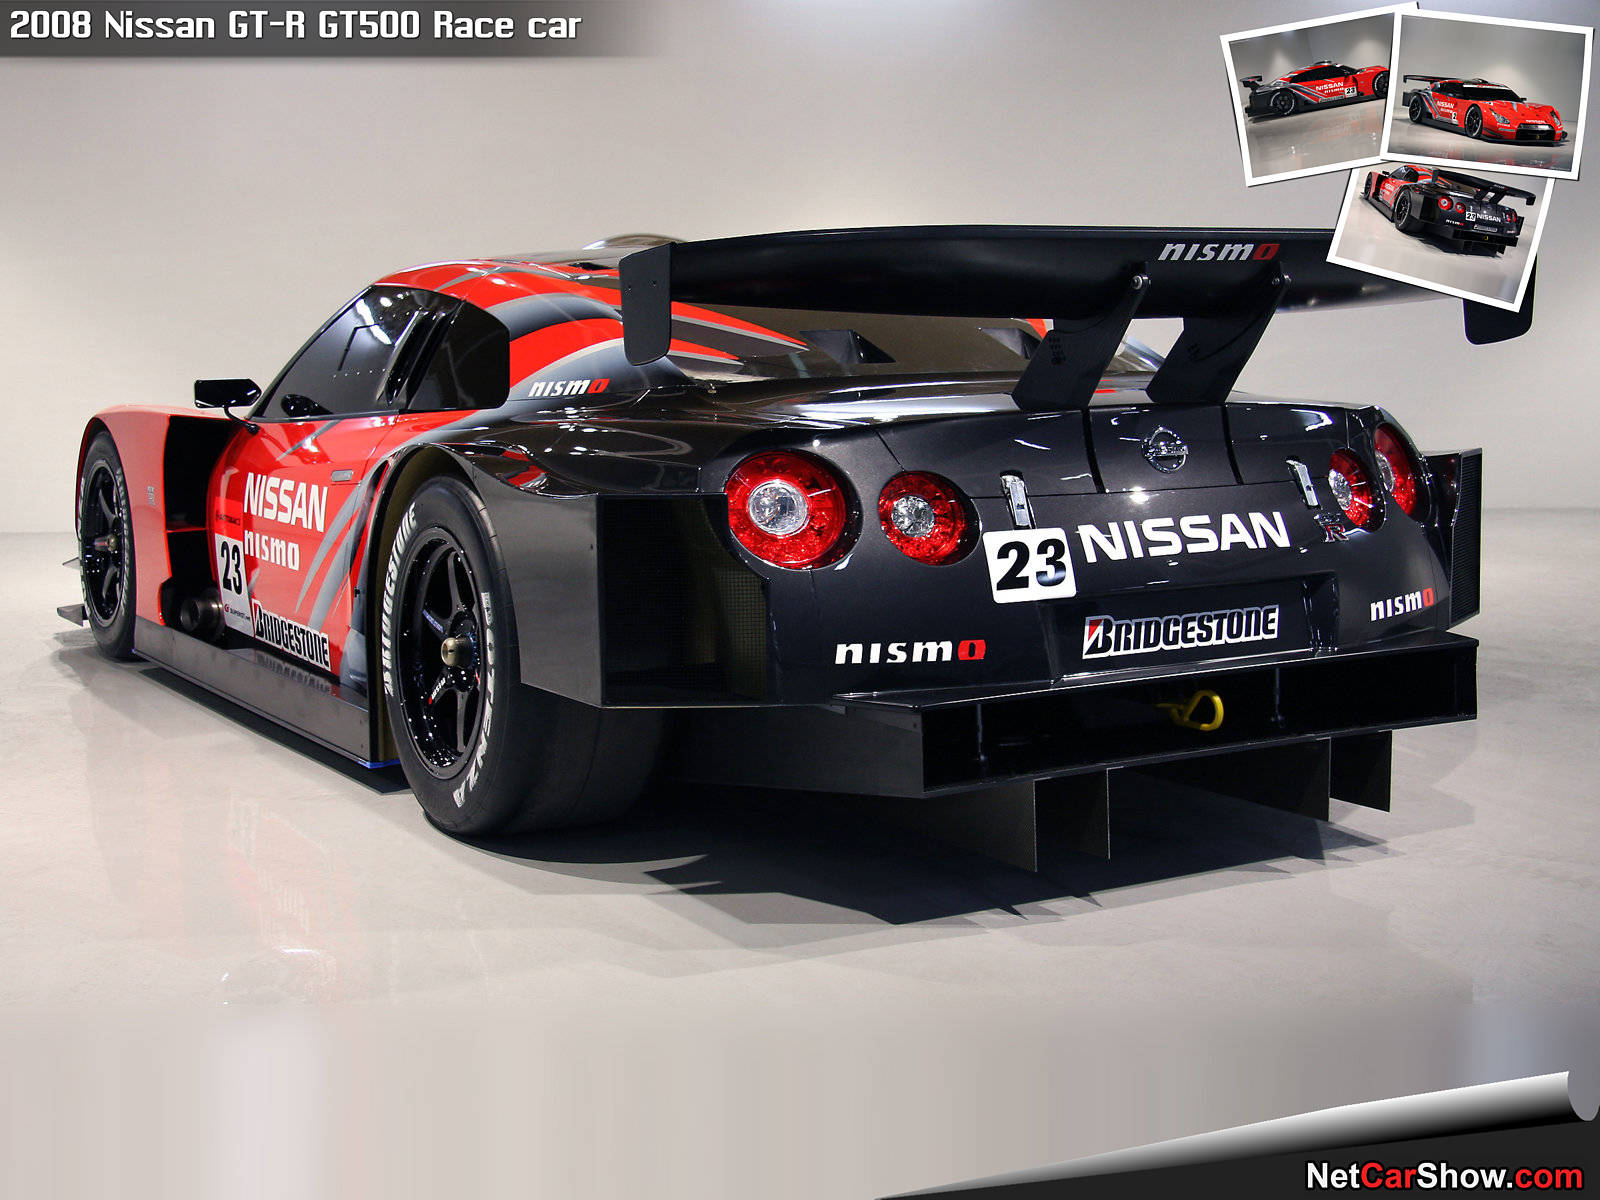 Nissan-GT-R_GT500_Race_car-2008-1600-03.jpg